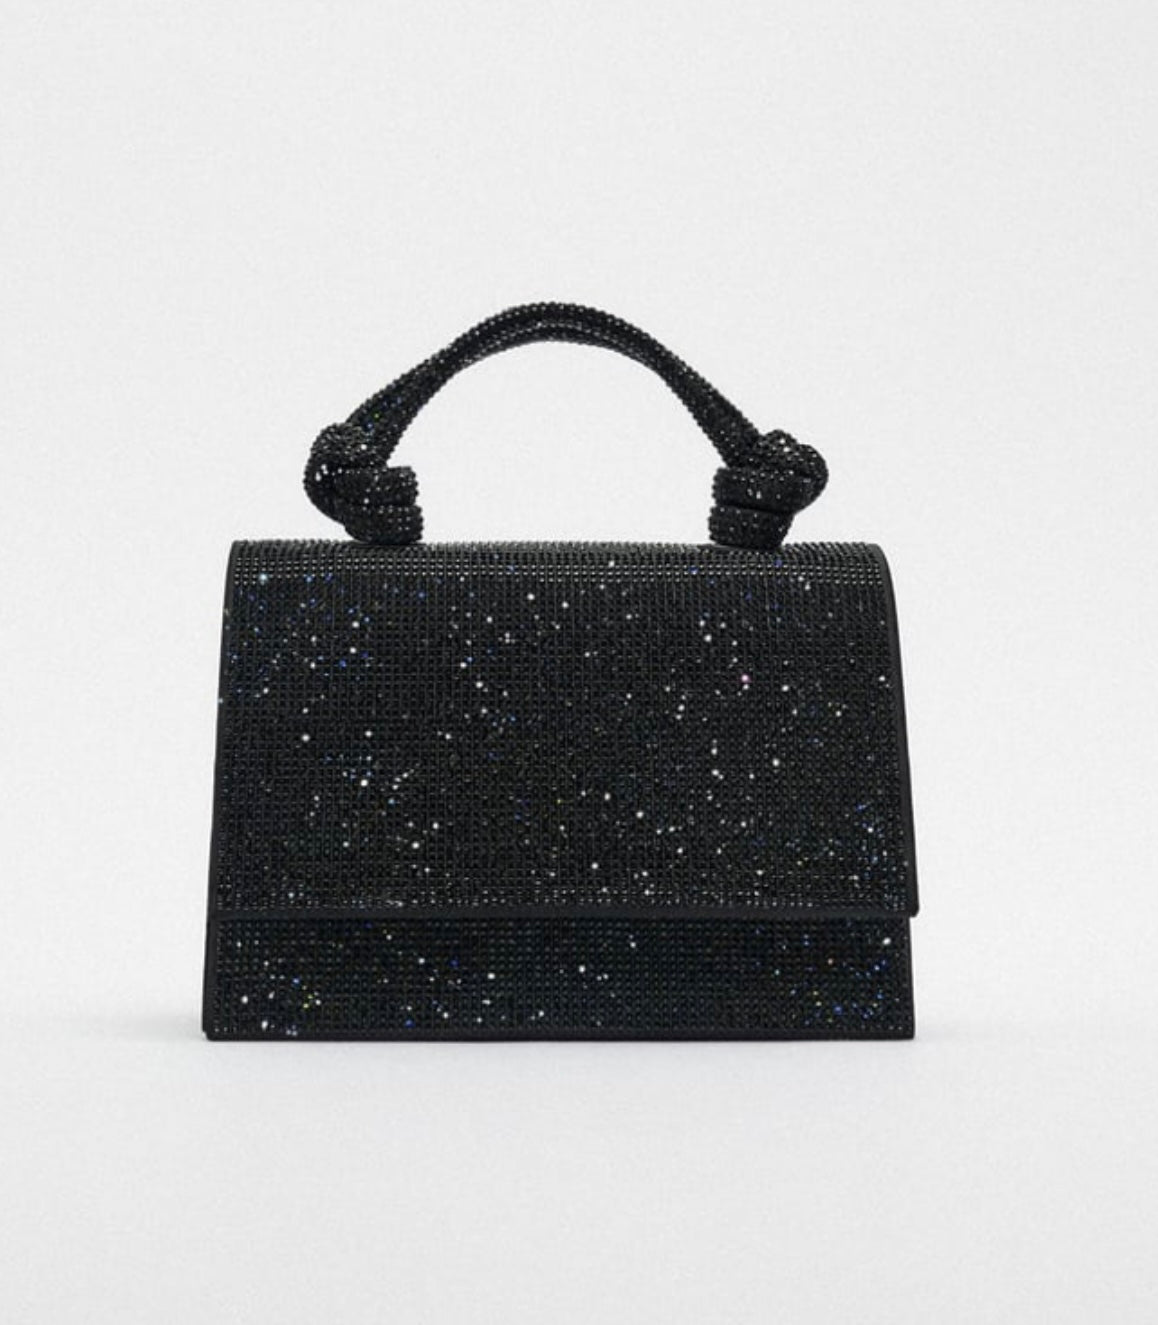 Shiny Black Handbag - Rental